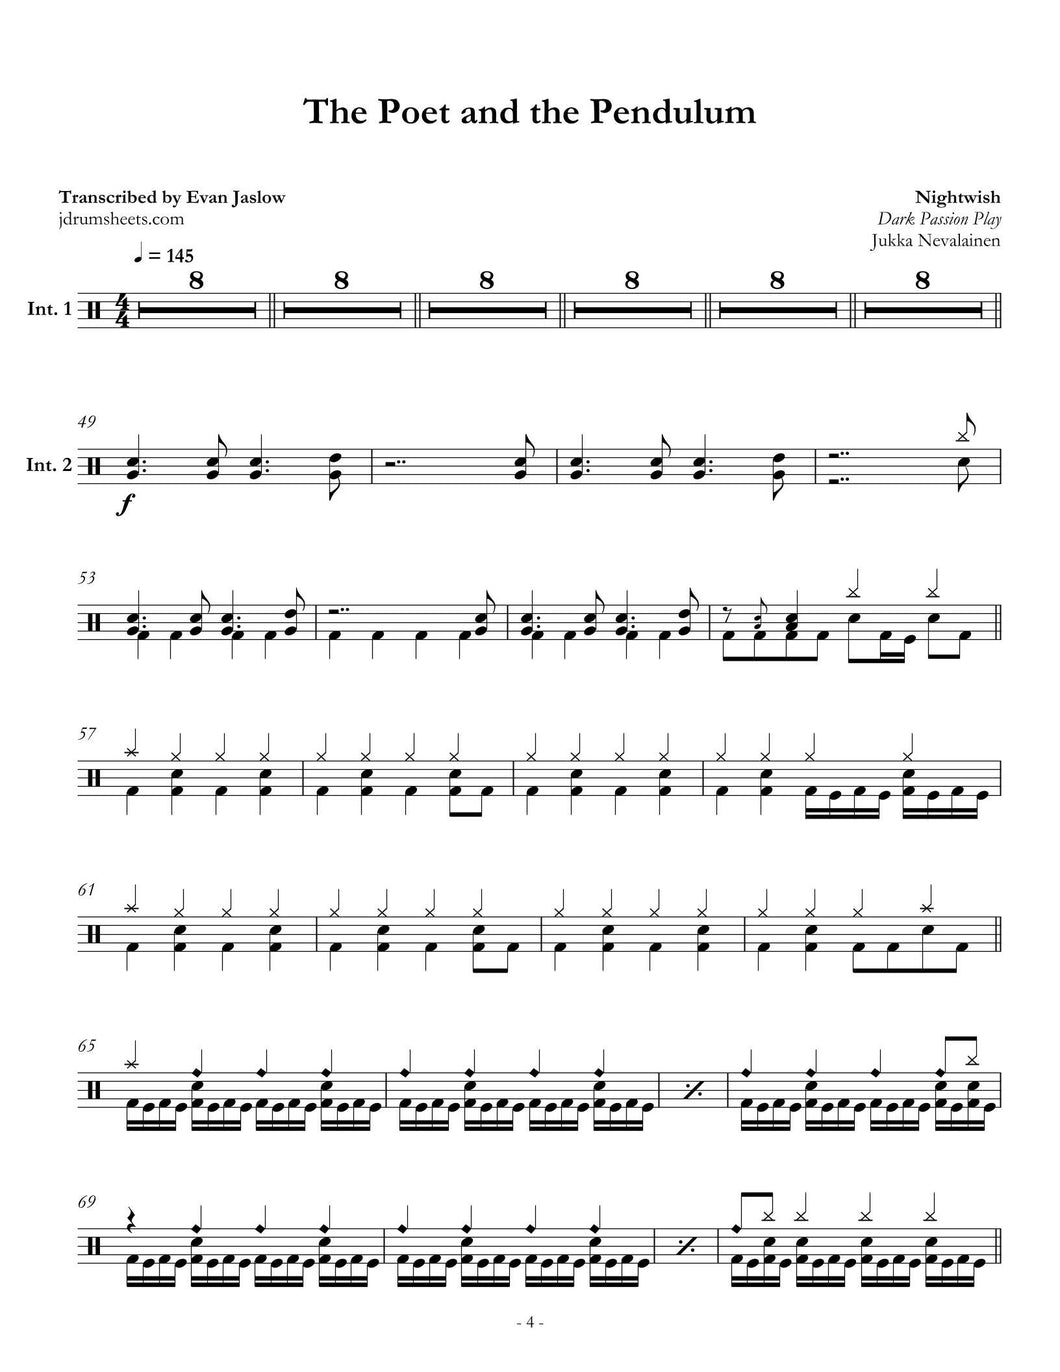 The Poet and the Pendulum - Nightwish - Full Drum Transcription / Drum Sheet Music - Jaslow Drum Sheets